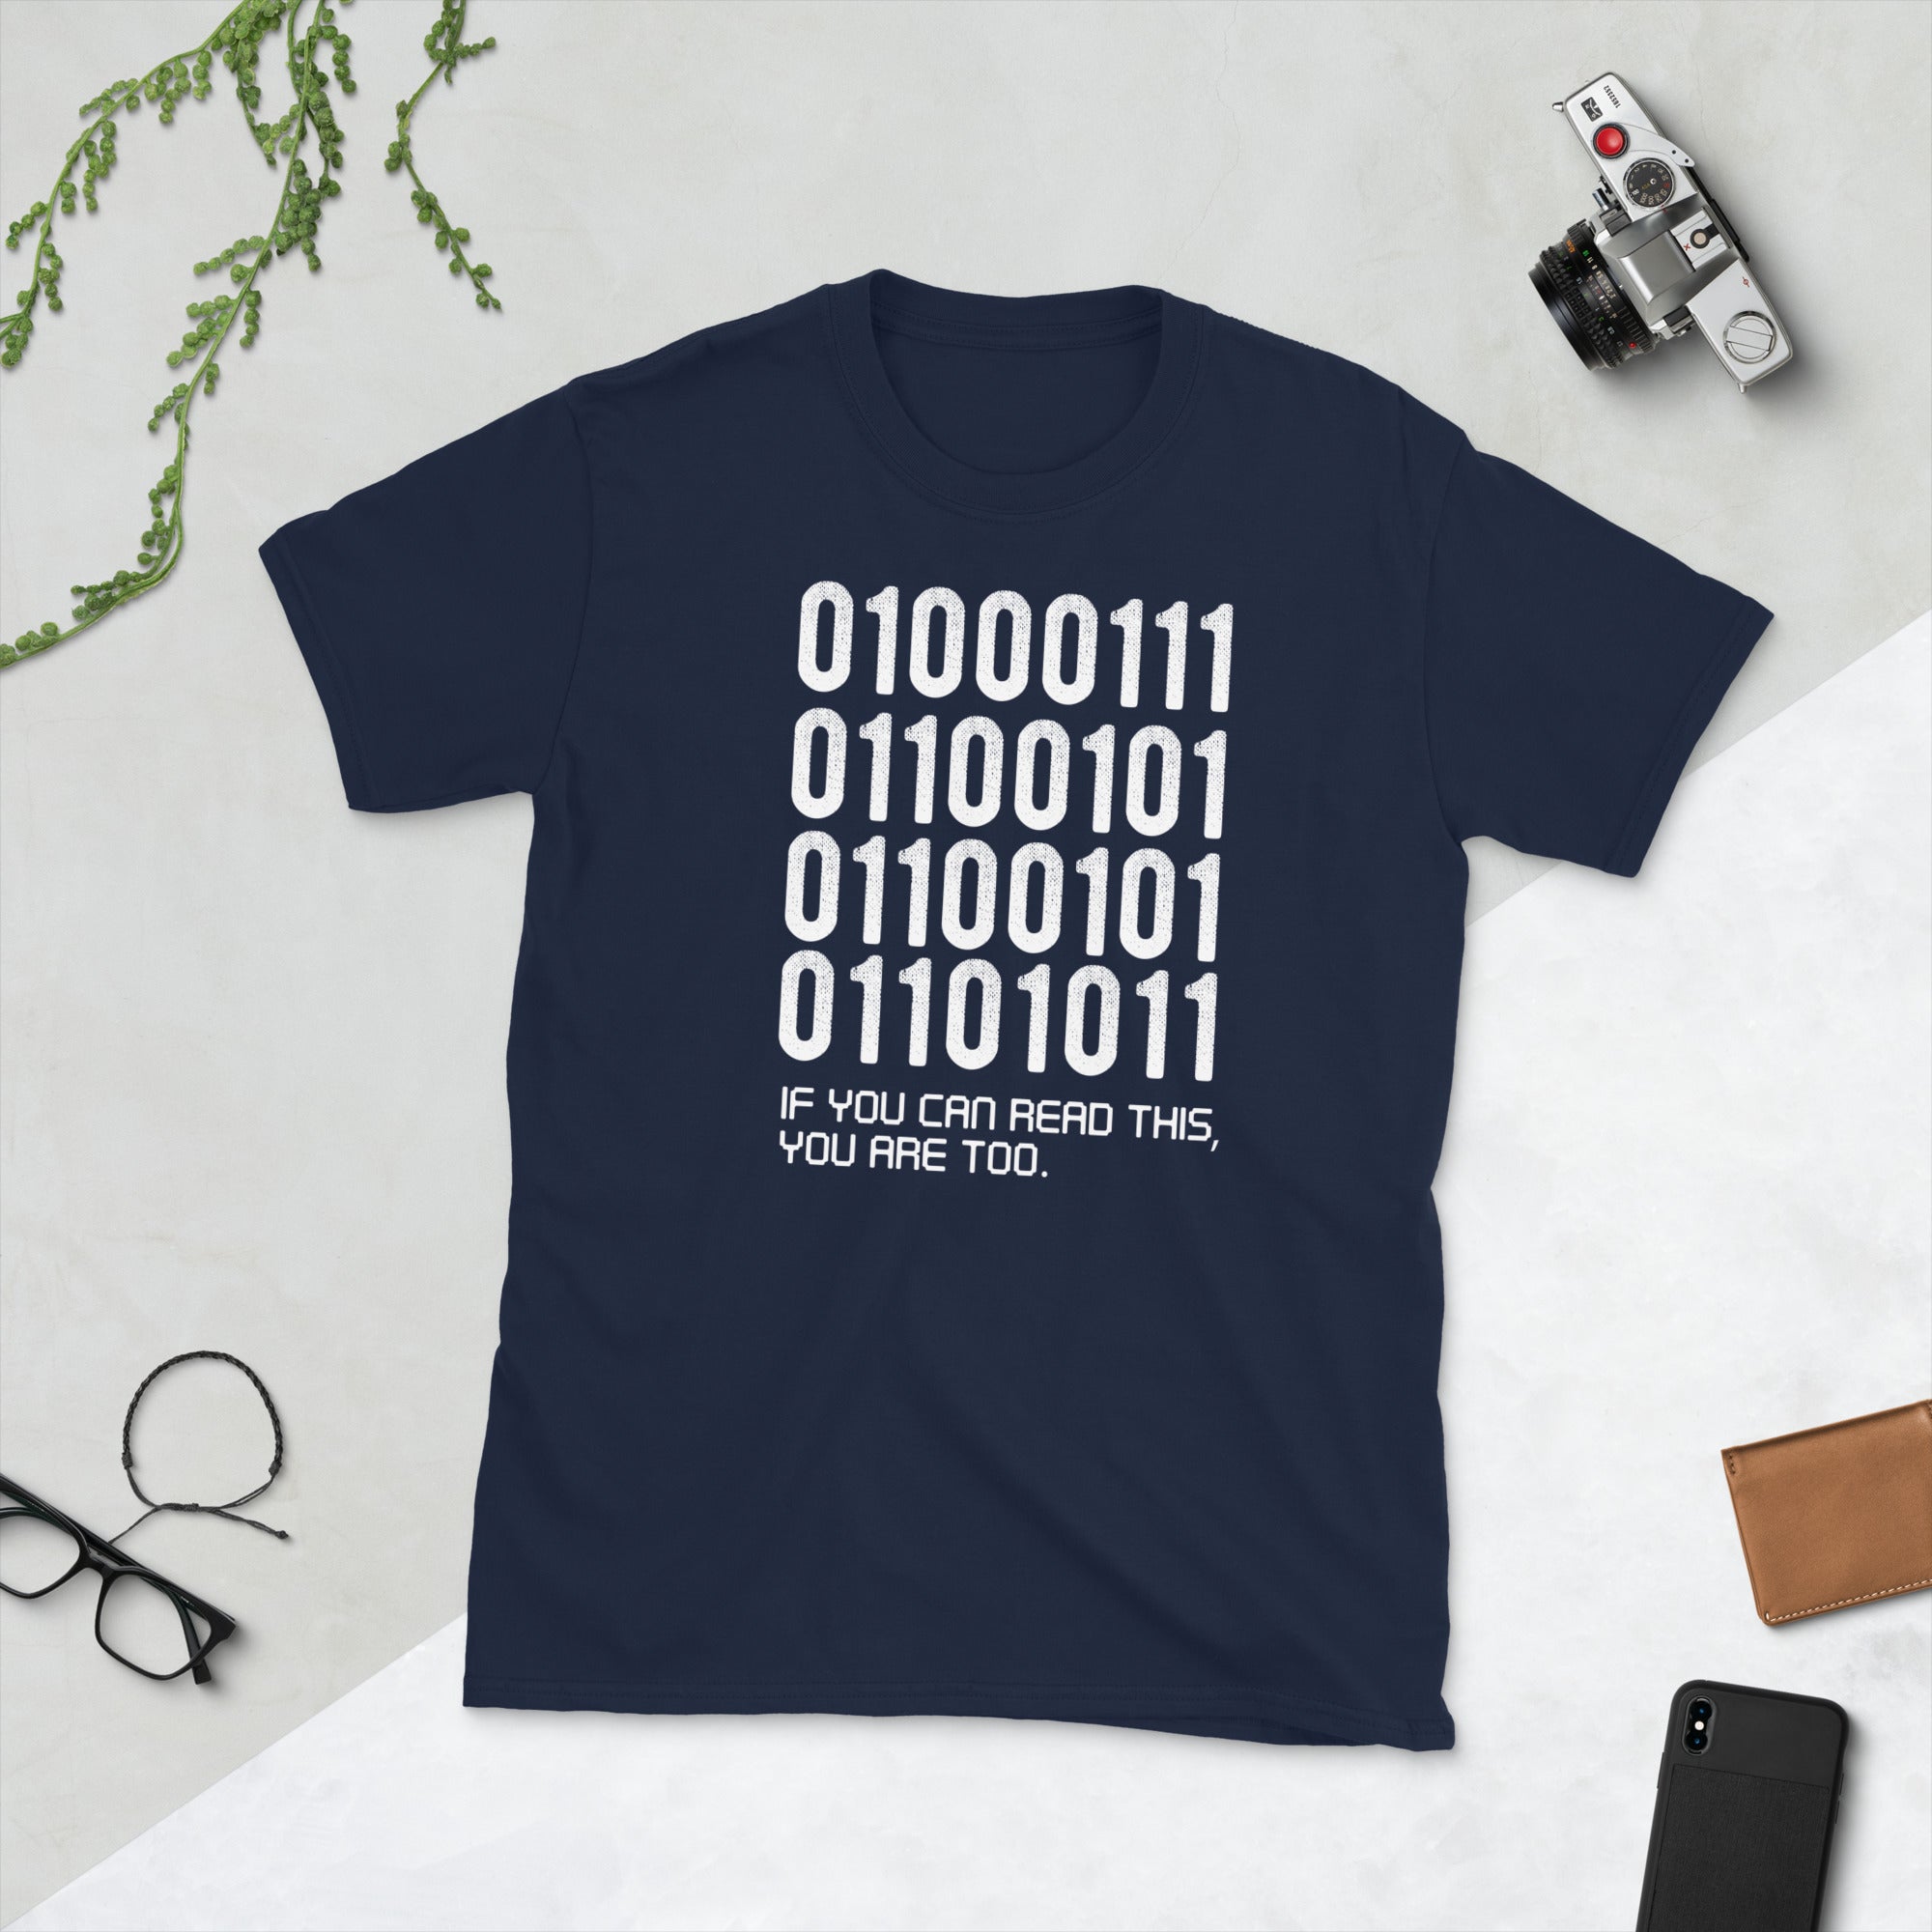 Software Developer Shirt, Software Engineer Funny Gift, Computer Programmer Tee, Binary Code Shirt, Web Developer Gift, Computer Geek Shirt